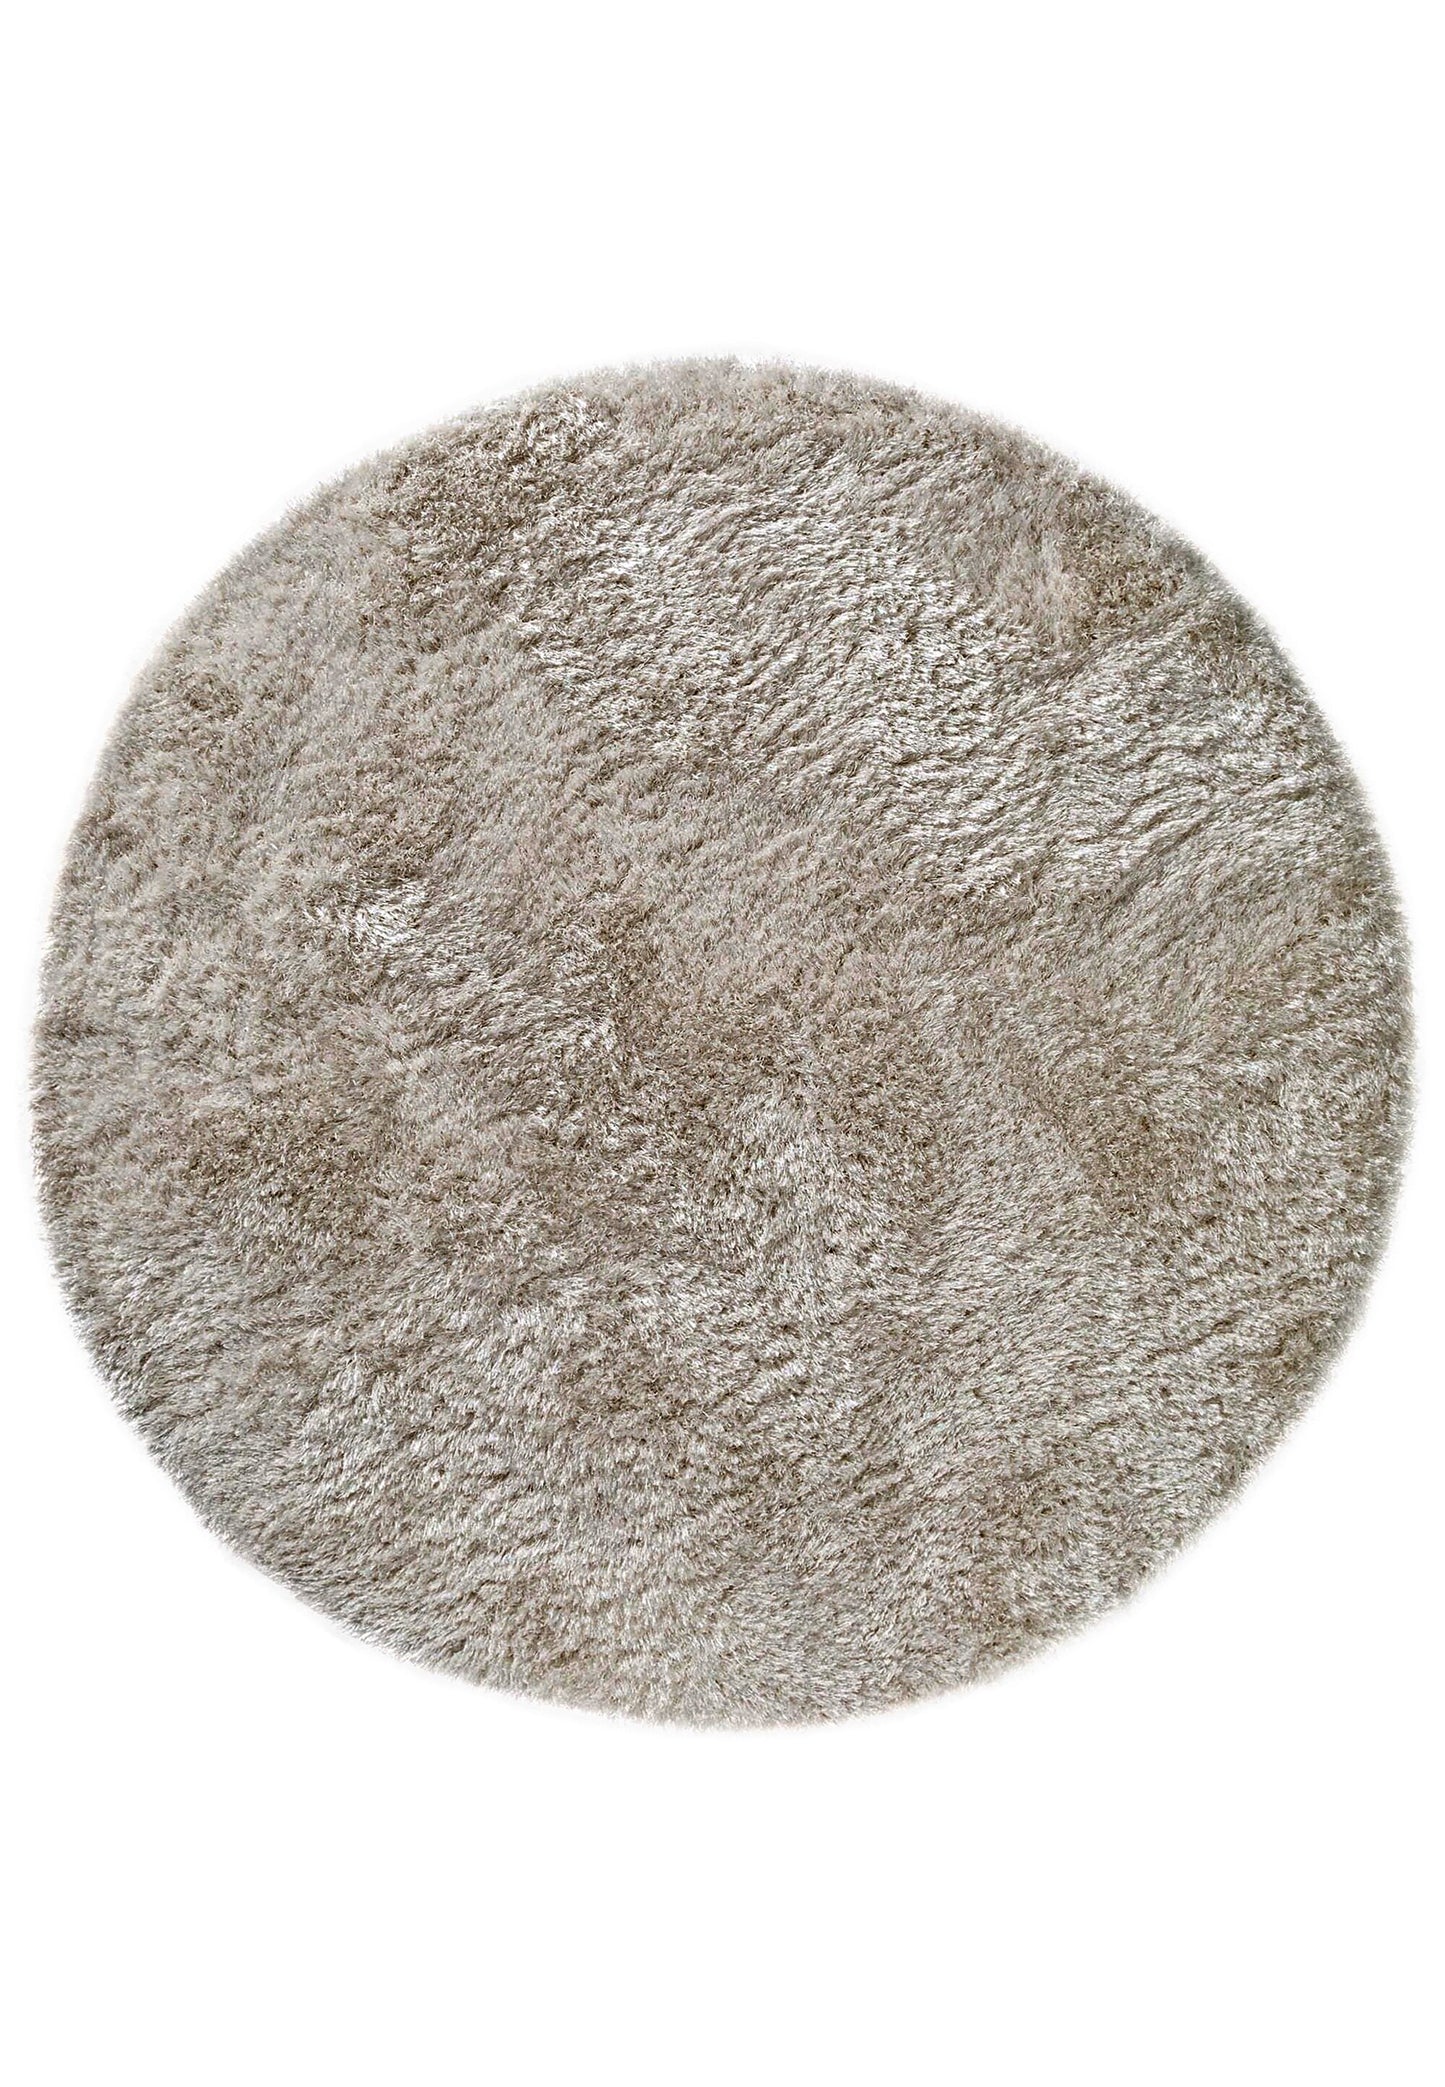 Asiatic Carpets Plush Hand Woven Rug Sand - 120 x 170cm